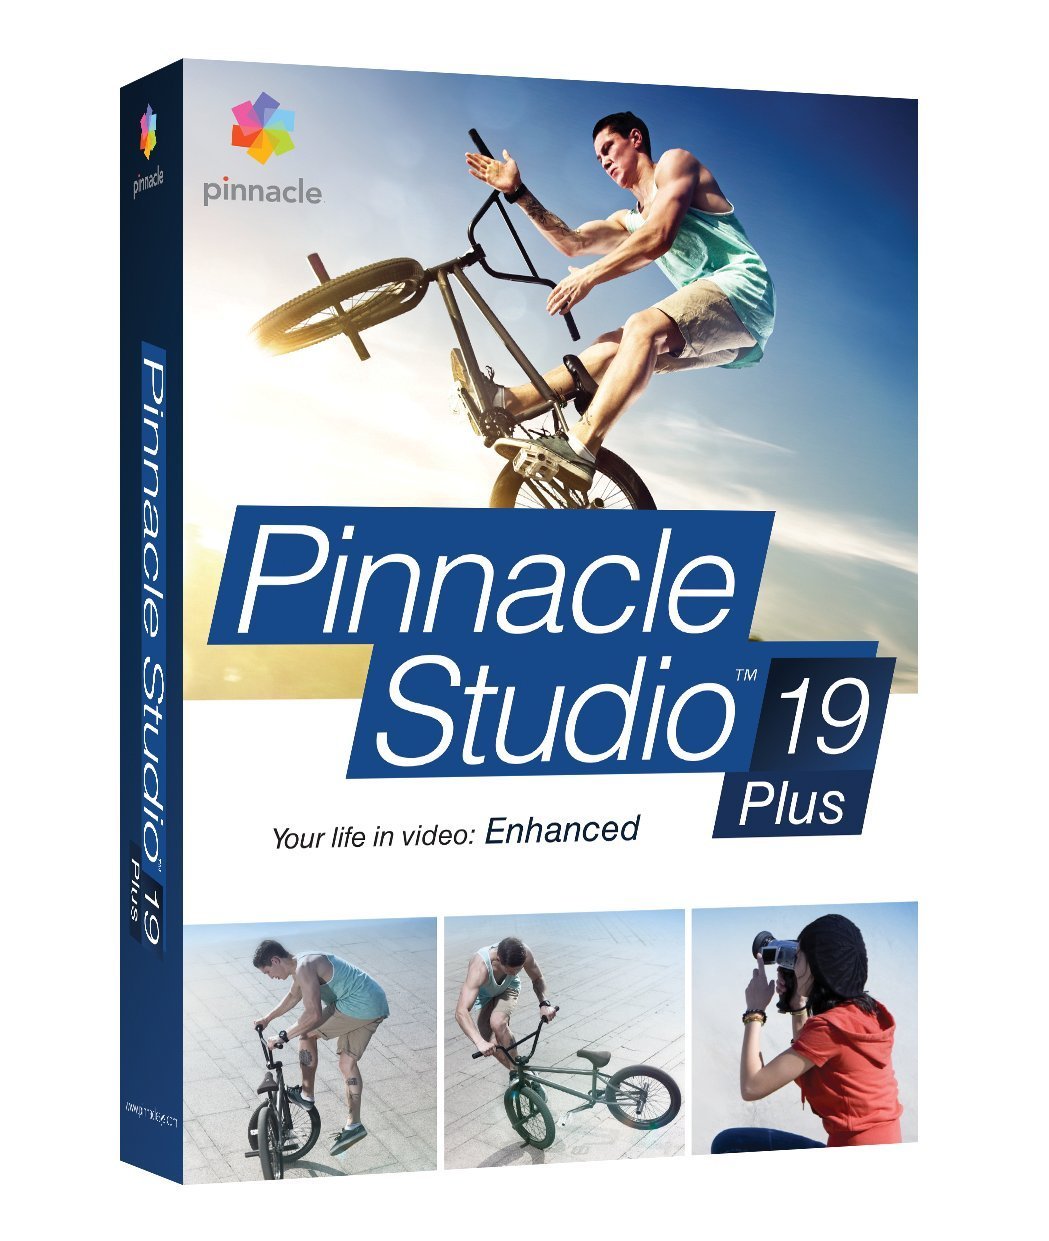 Pinnacle Studio 19 Plus by Pinnacle Systems Platform : Windows 10, Windows 8, Windows 7